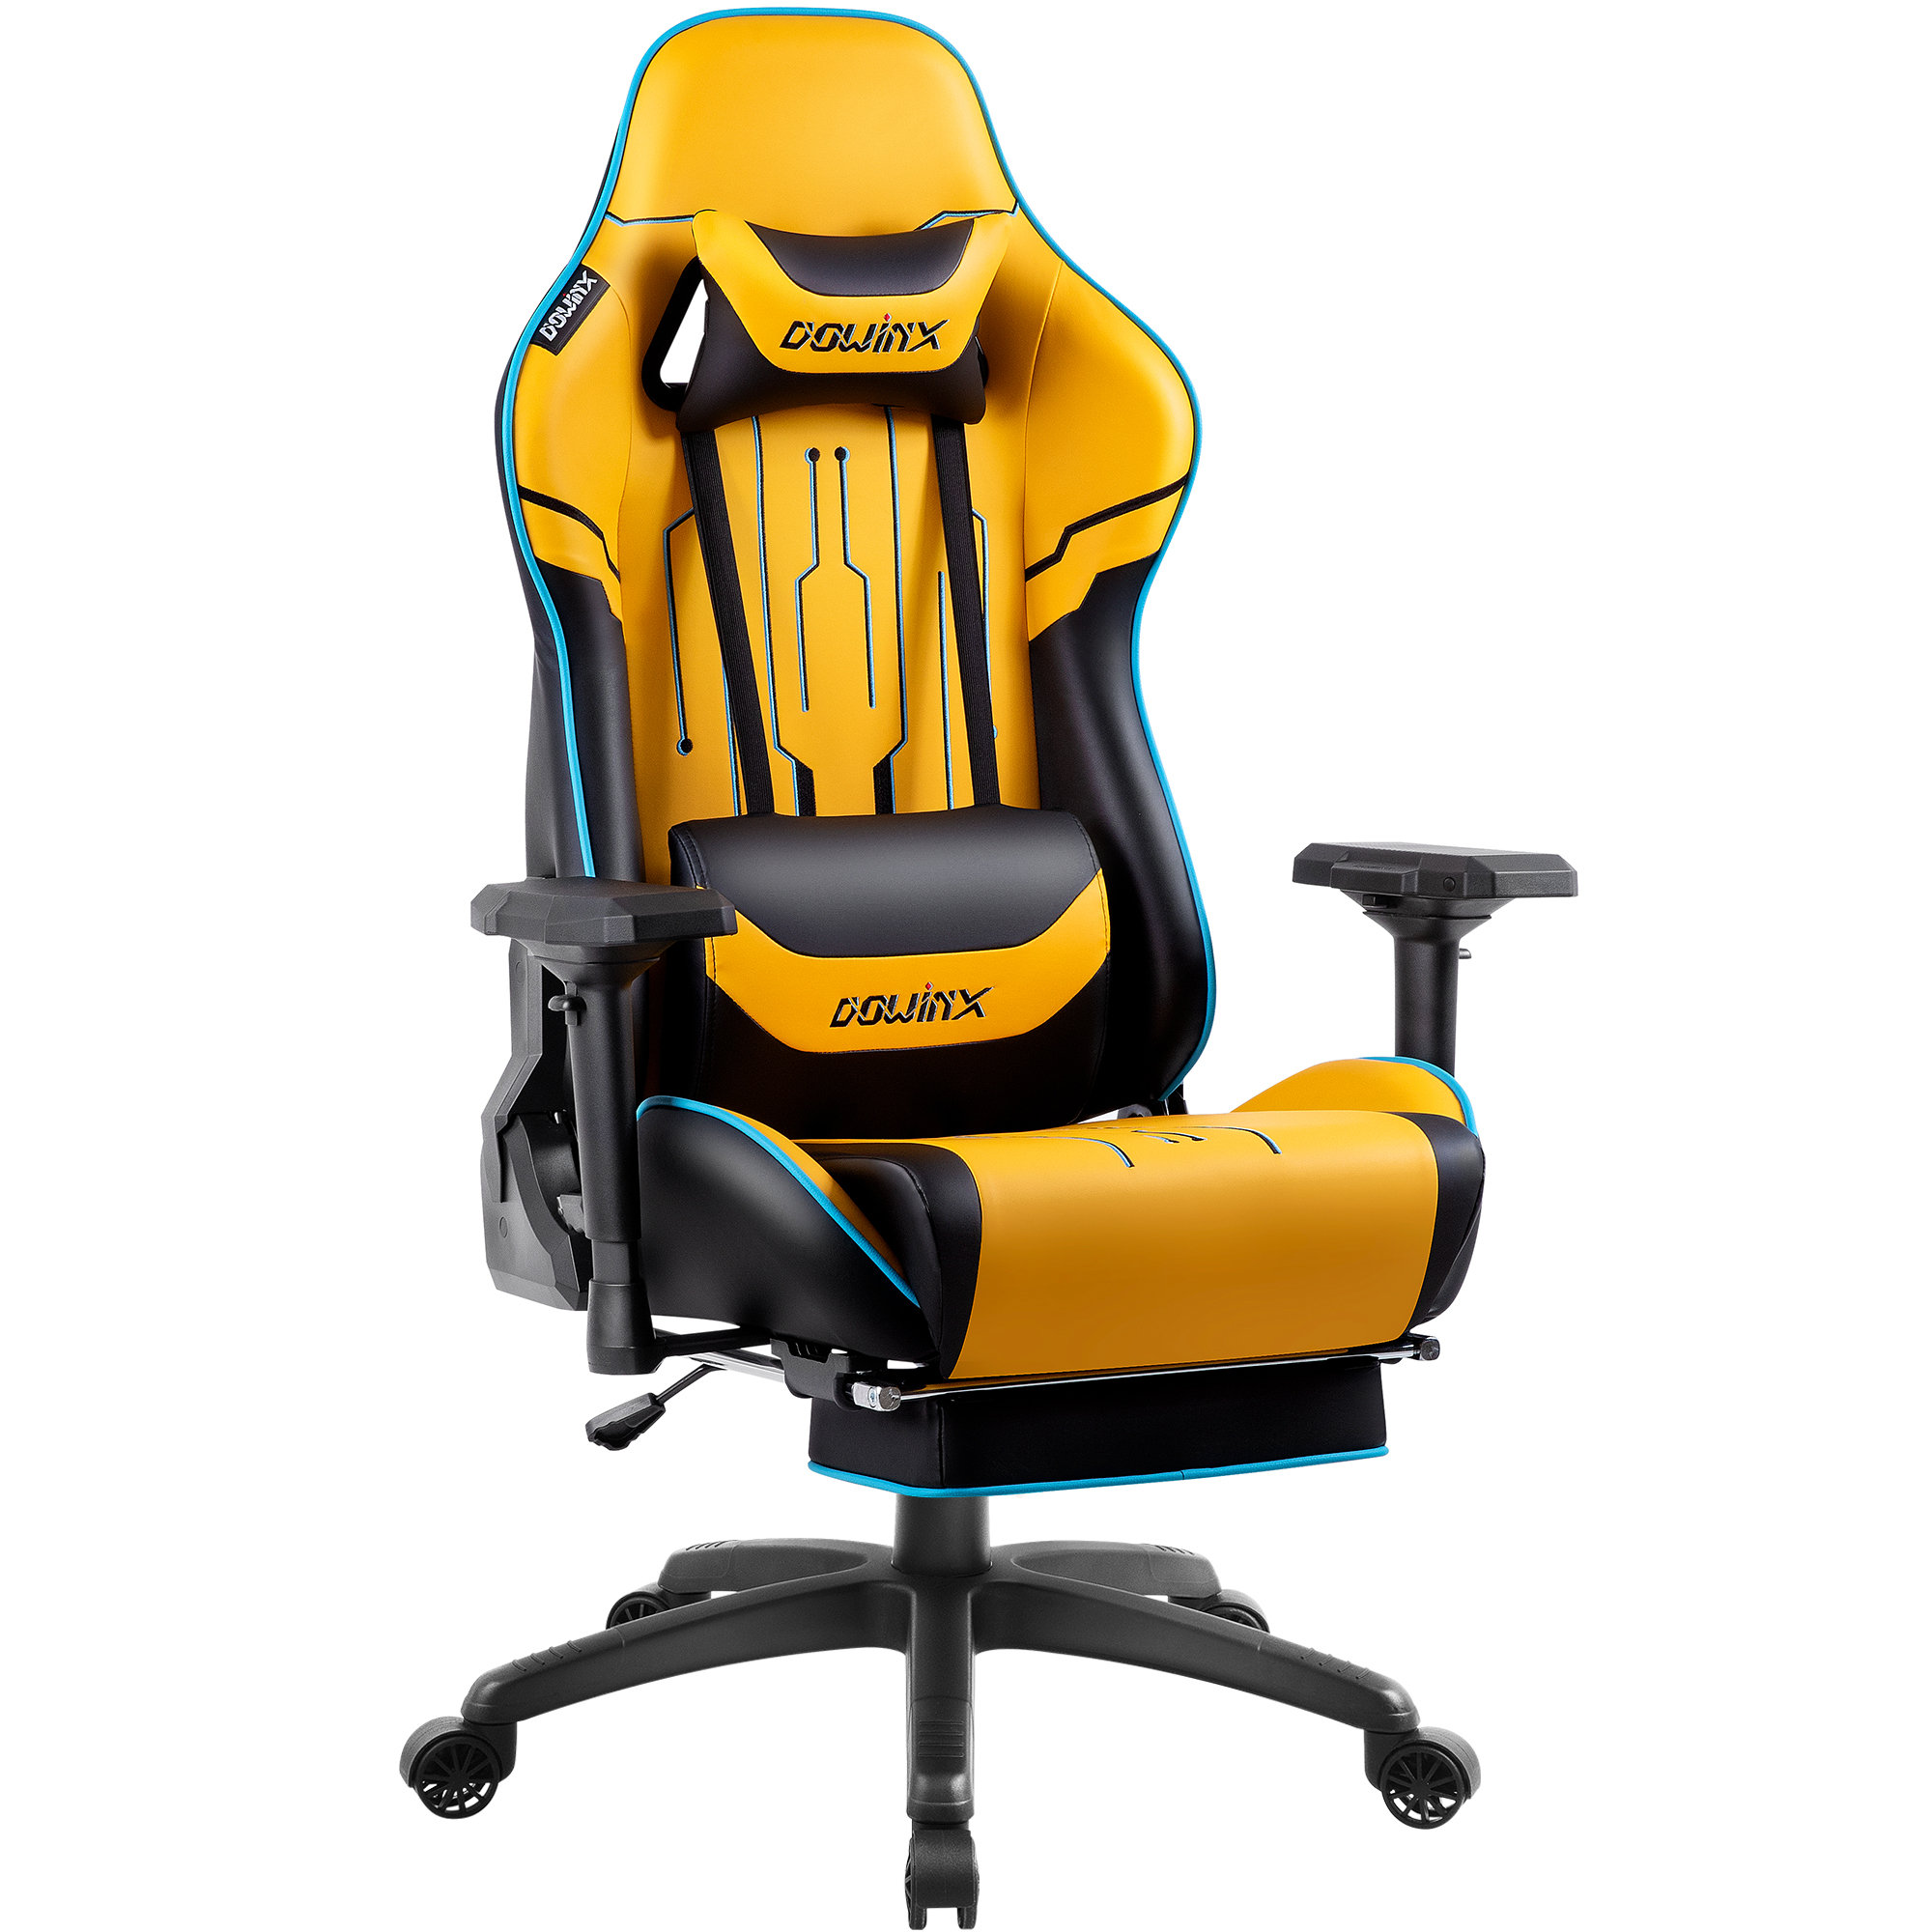 Dowinx Ergonomic Gaming Chair With Pocket, Spring Cushion, Massage